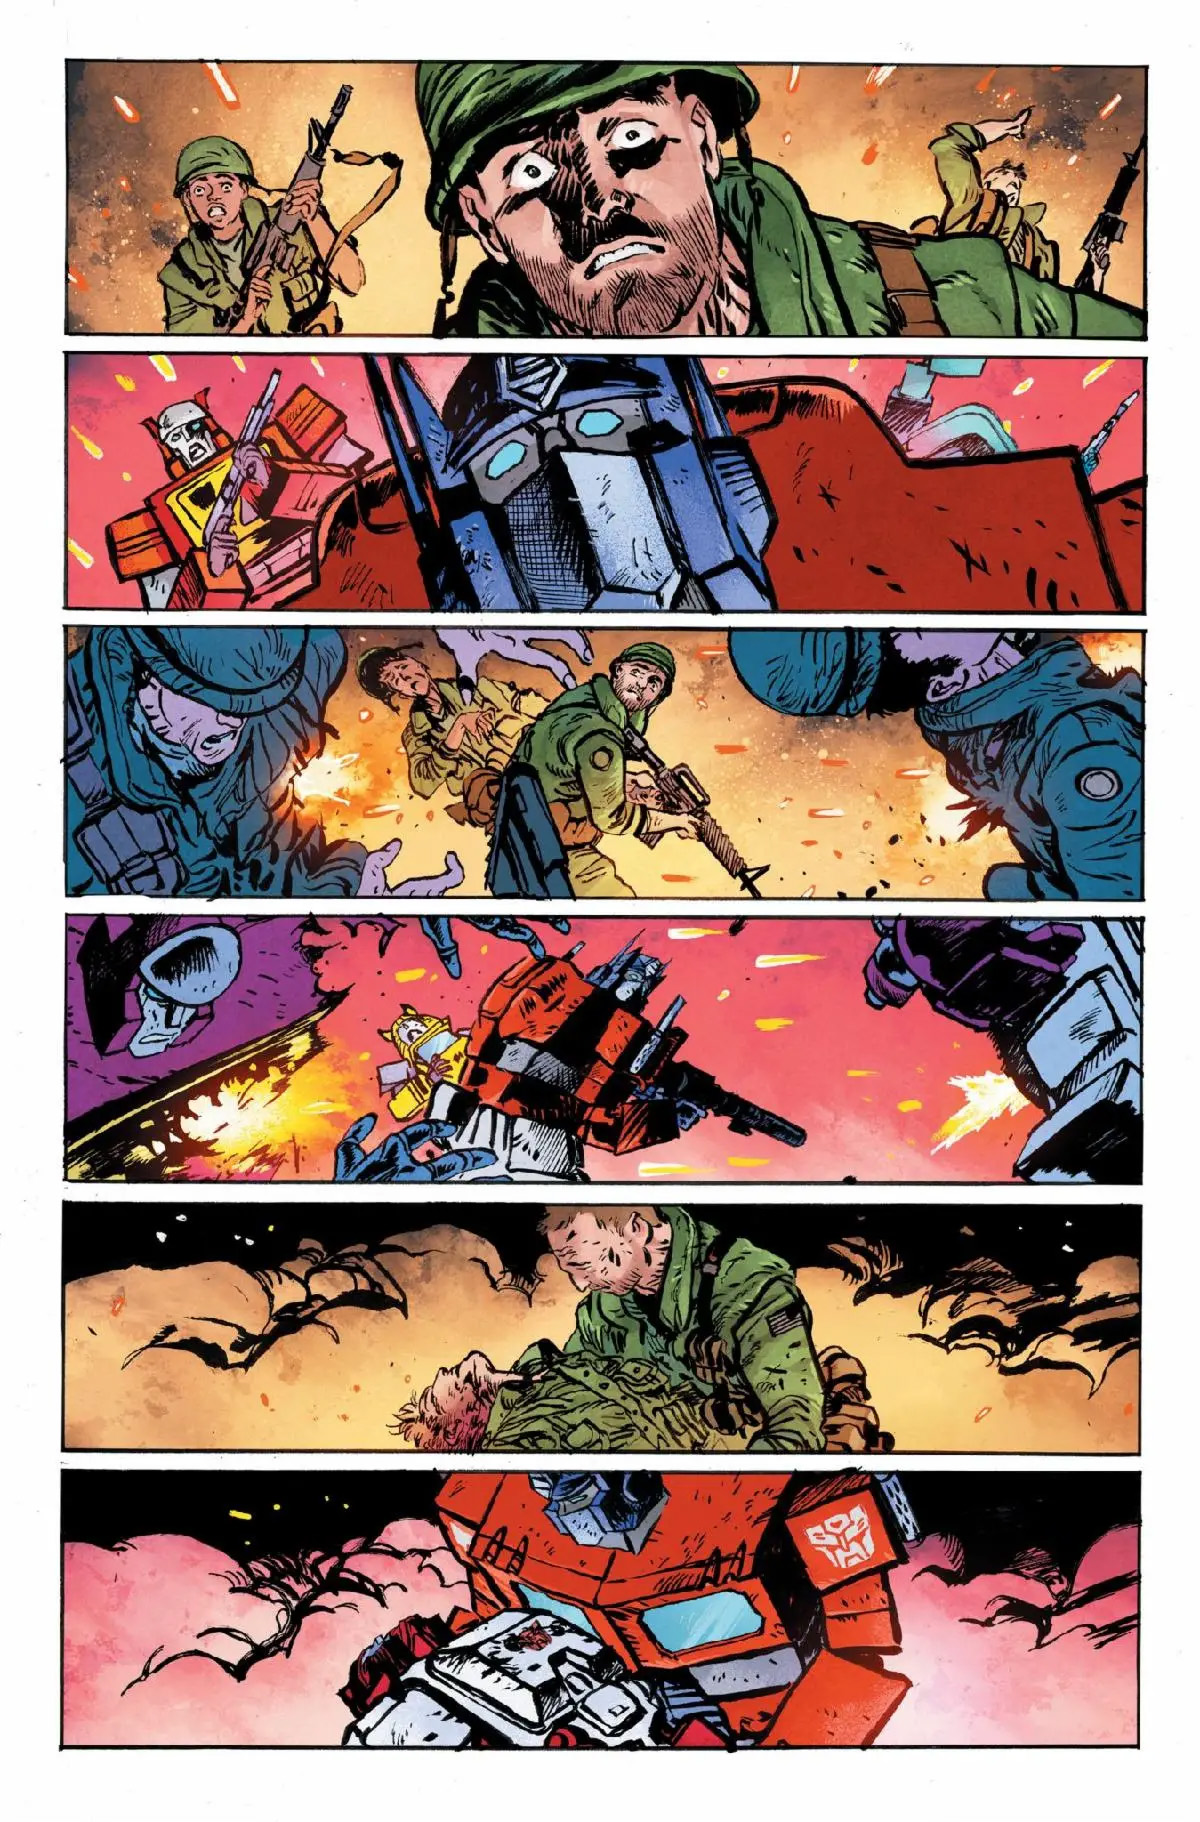 Pagini din Transformers #5